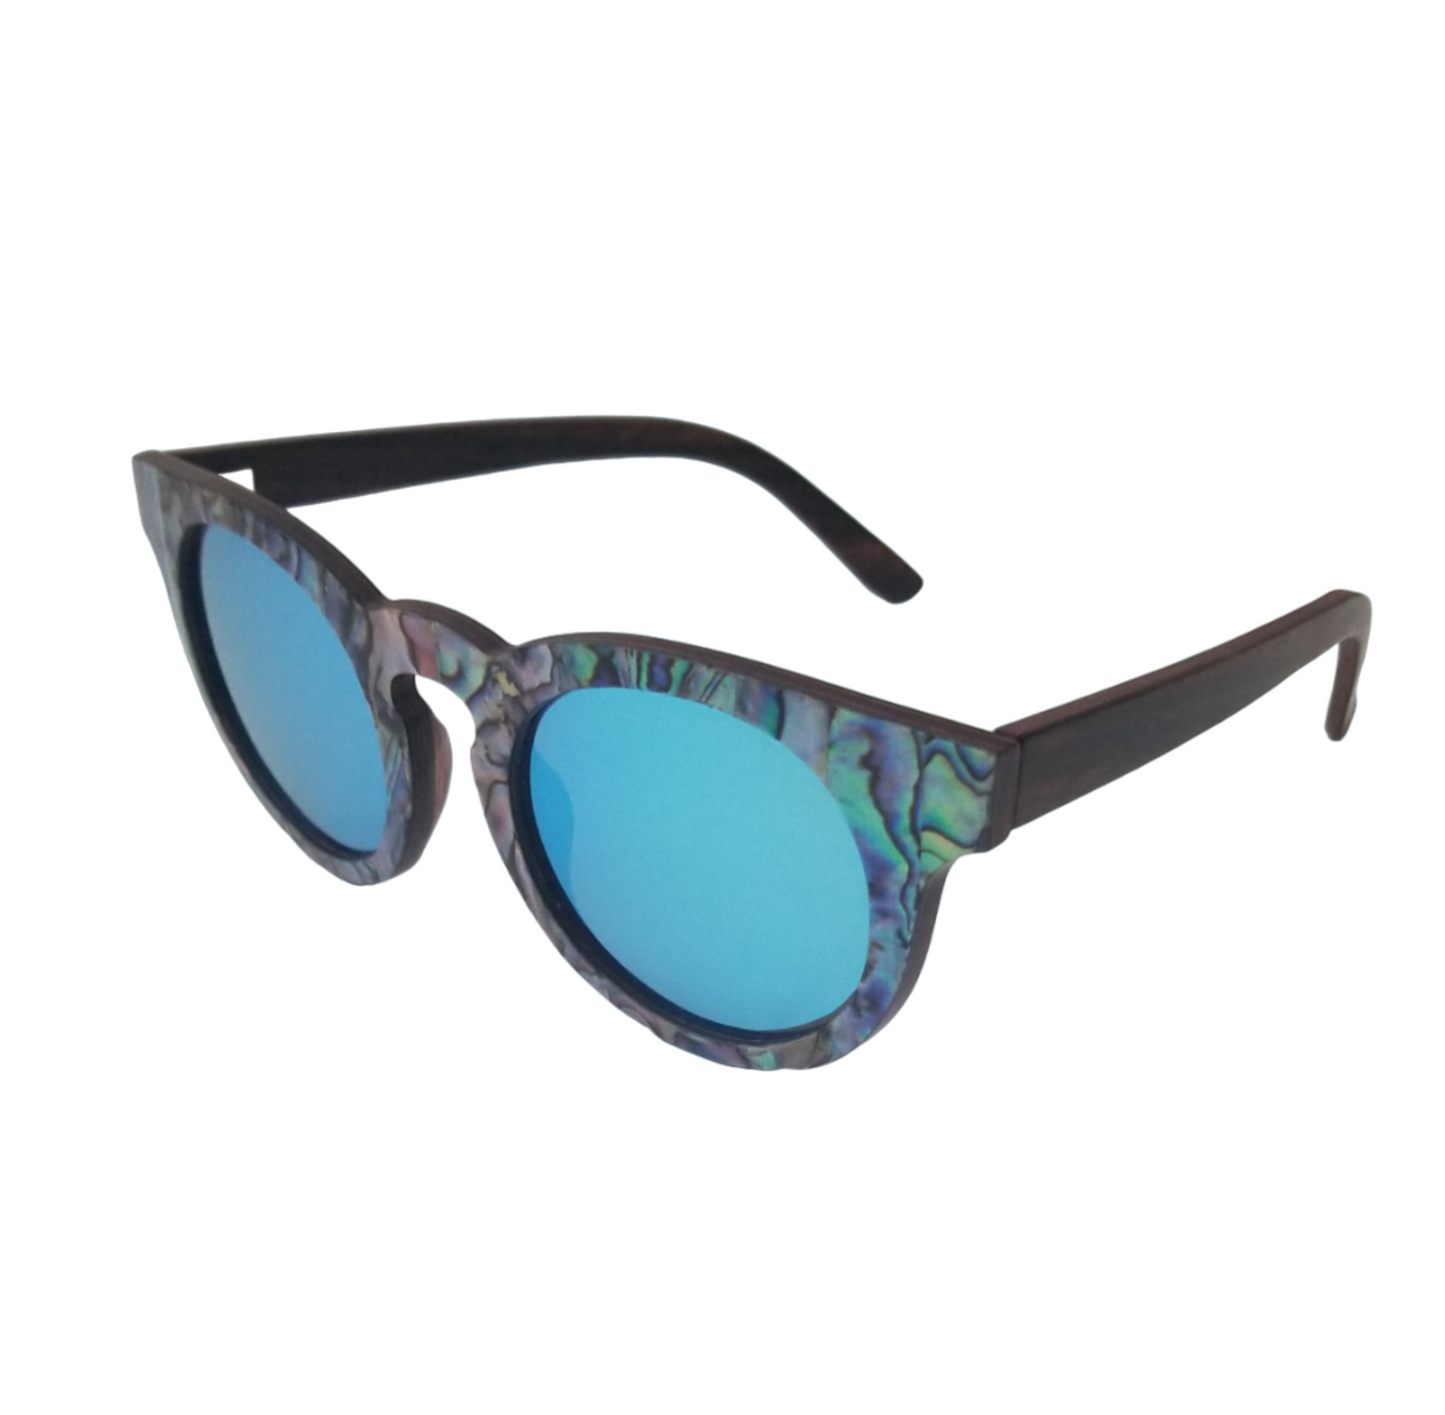 StreetFrogs Sea Shell Sunglasses